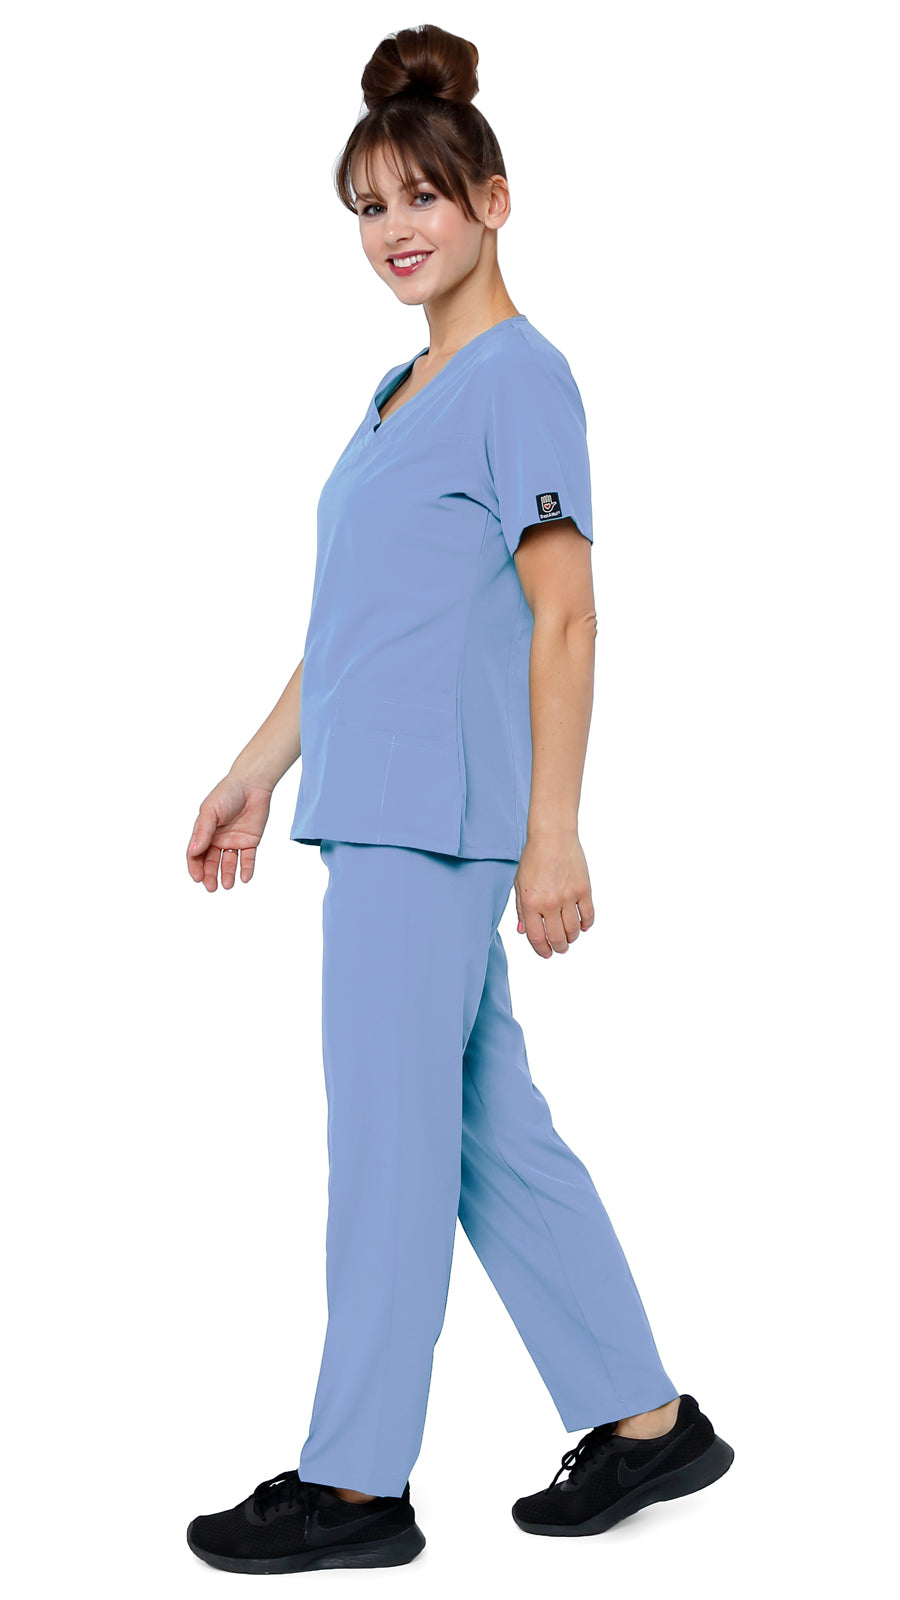 Women's Designer Slim Fit Contrast Medical Scrubs - Style 804